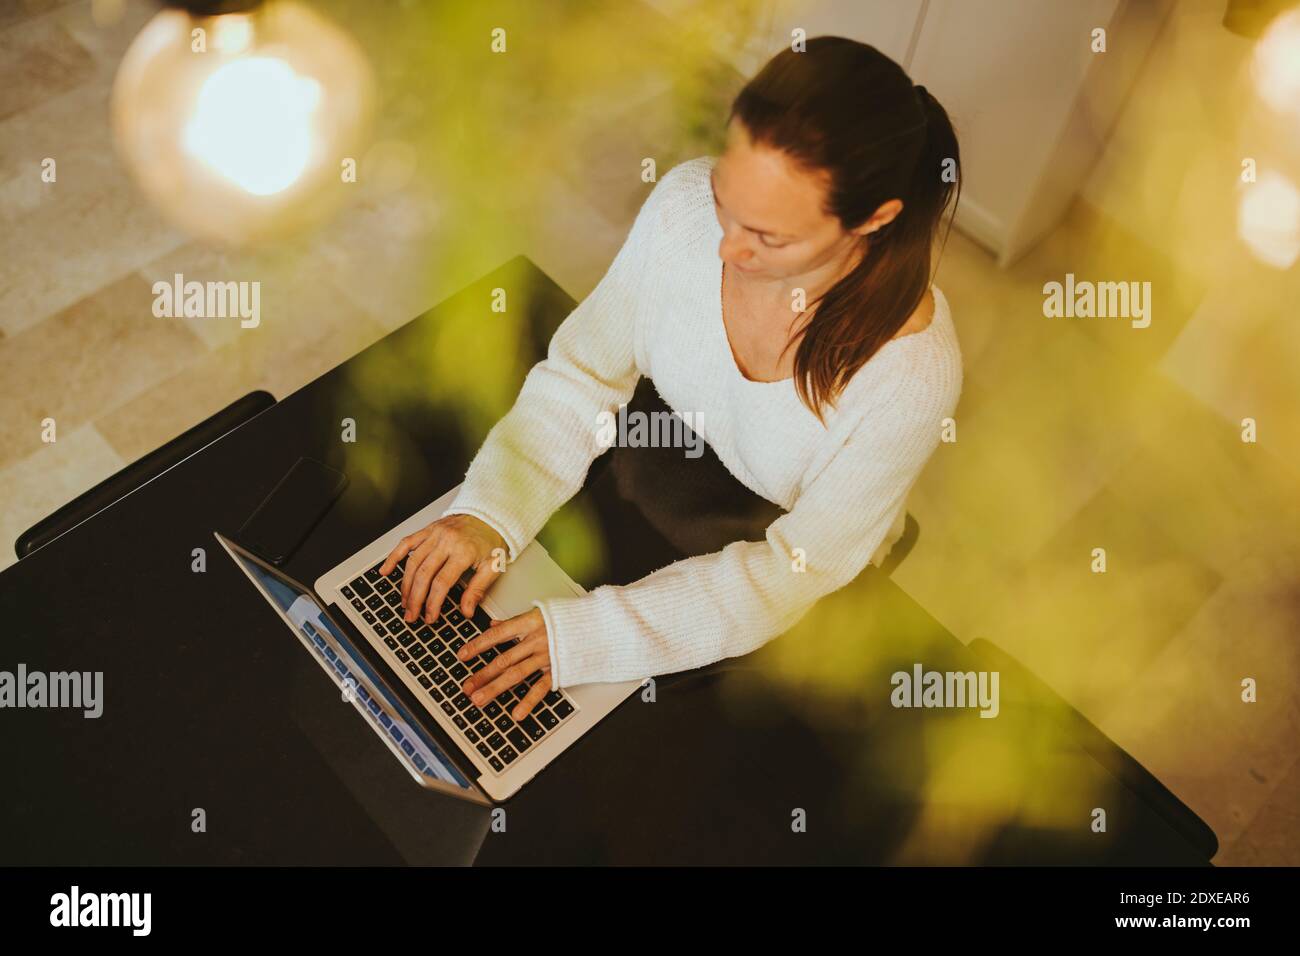 Woman using laptop at kitchen island Stock Photo